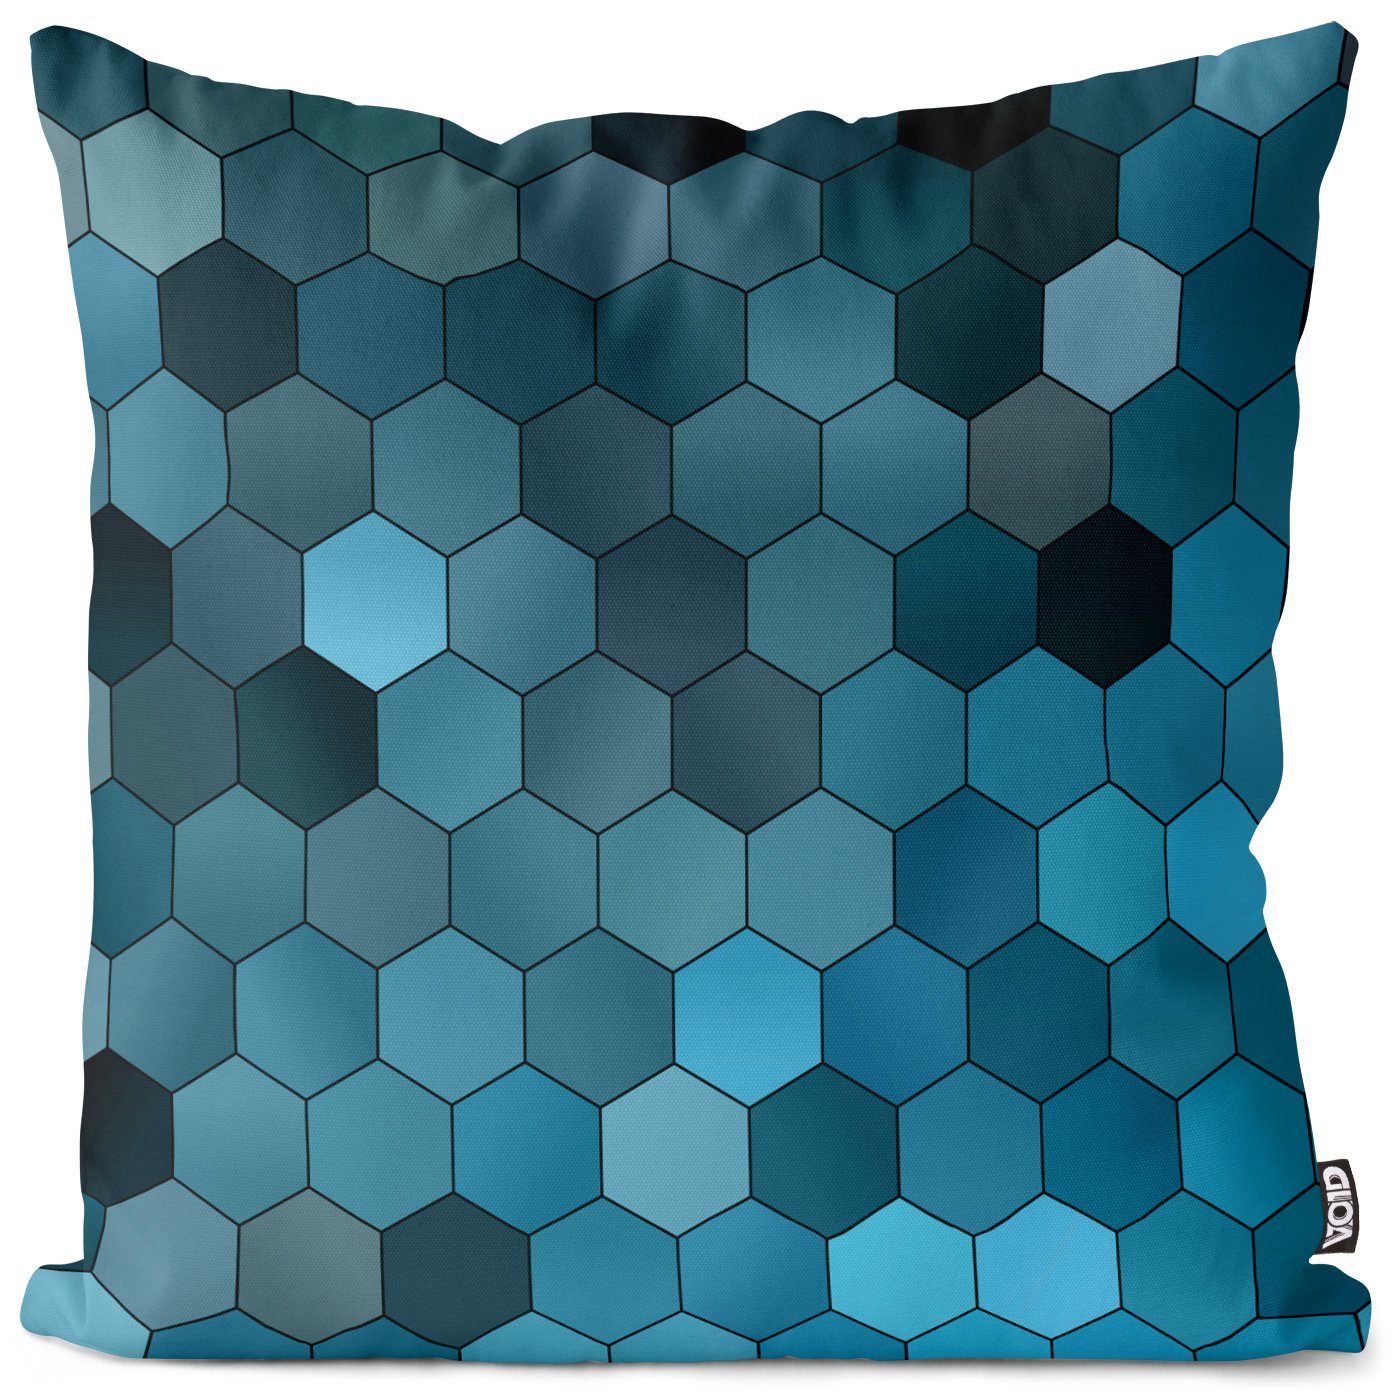 Kissenbezug, VOID (1 Stück), Hexagon Muster Kissenbezug Gemustert Blau  Türkis Grafik Kunst Technik Geometris online kaufen | OTTO